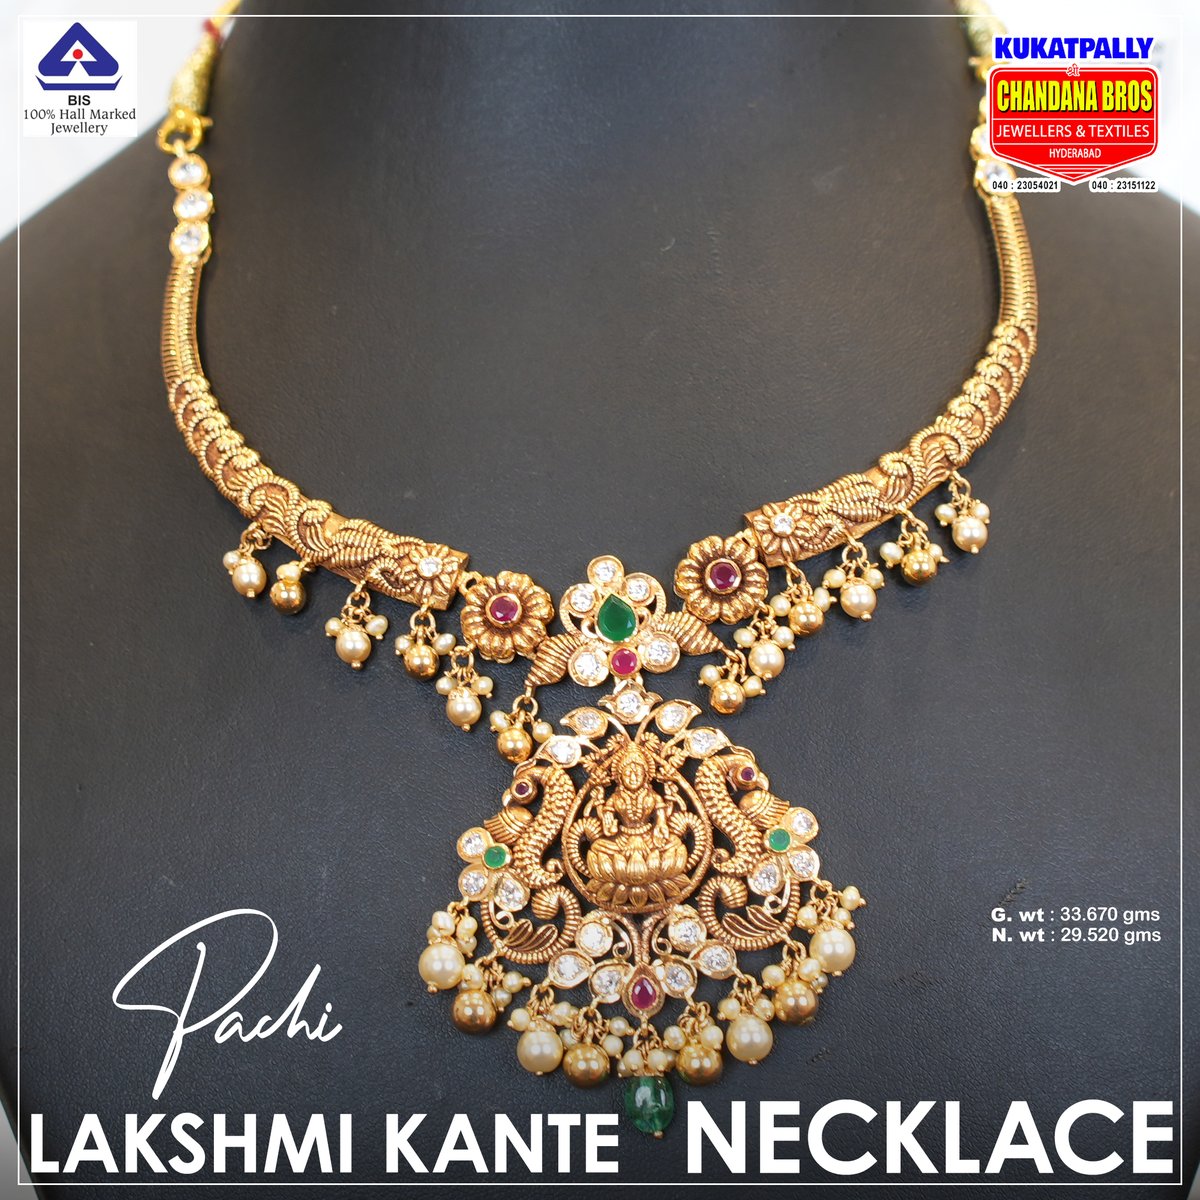 Pachi Lakshmi Kante Necklace
G.wt : 33.670 gms, N.wt : 29.520 gms
Designed by Chandana Brothers KPHB.
For more details Call/WhatsApp +919704477744
.
.
#goldnecklace #bridaljewellery #fashion #lastestjewellery #nakshijewellery #lightweight #heavynecklaces #hallmarkjewellery